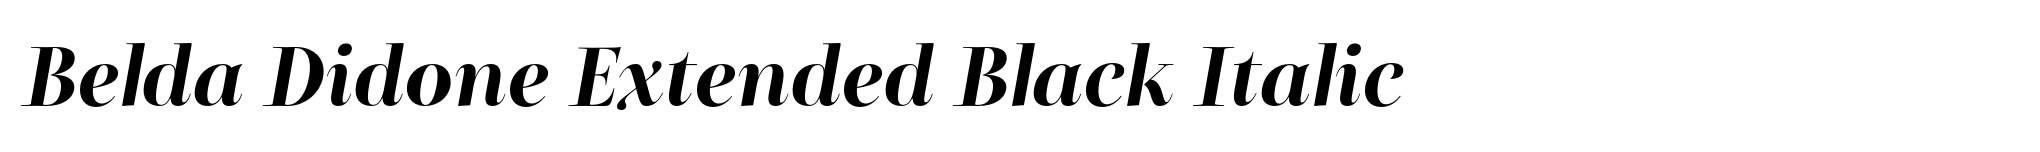 Belda Didone Extended Black Italic image